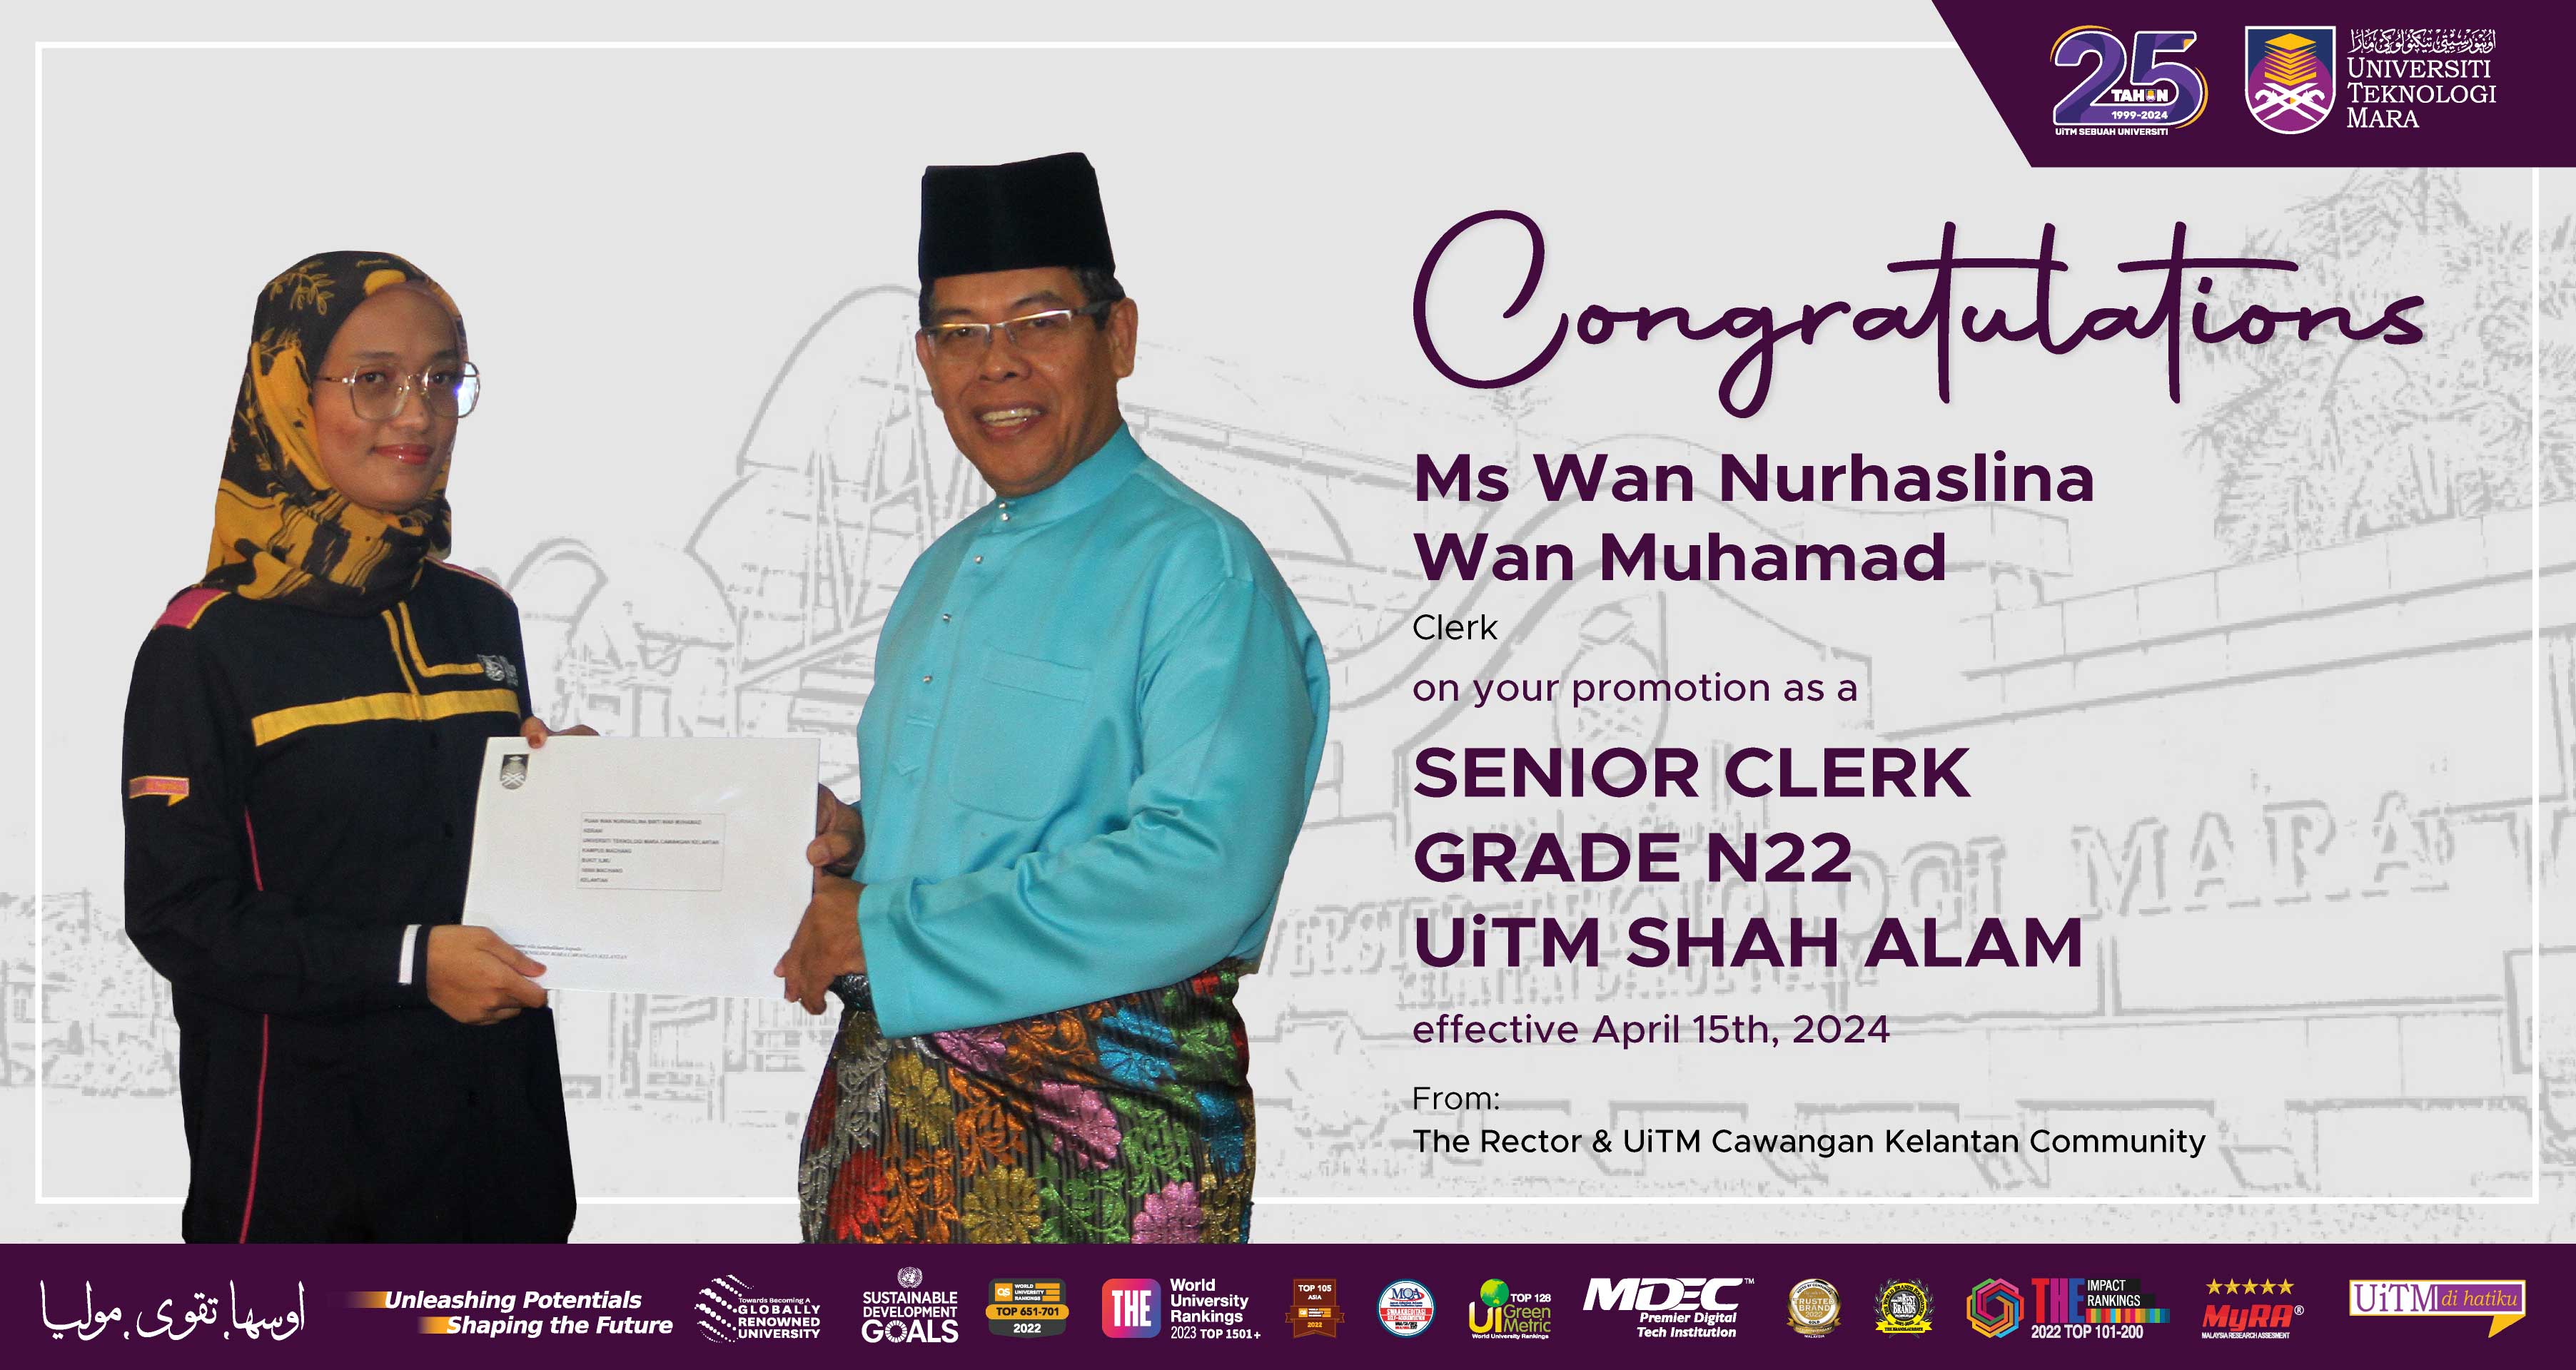 Congratulations and All the Best!!! Ms Wan Nurhaslina Wan Muhamad, Senior Clerk Grade N22